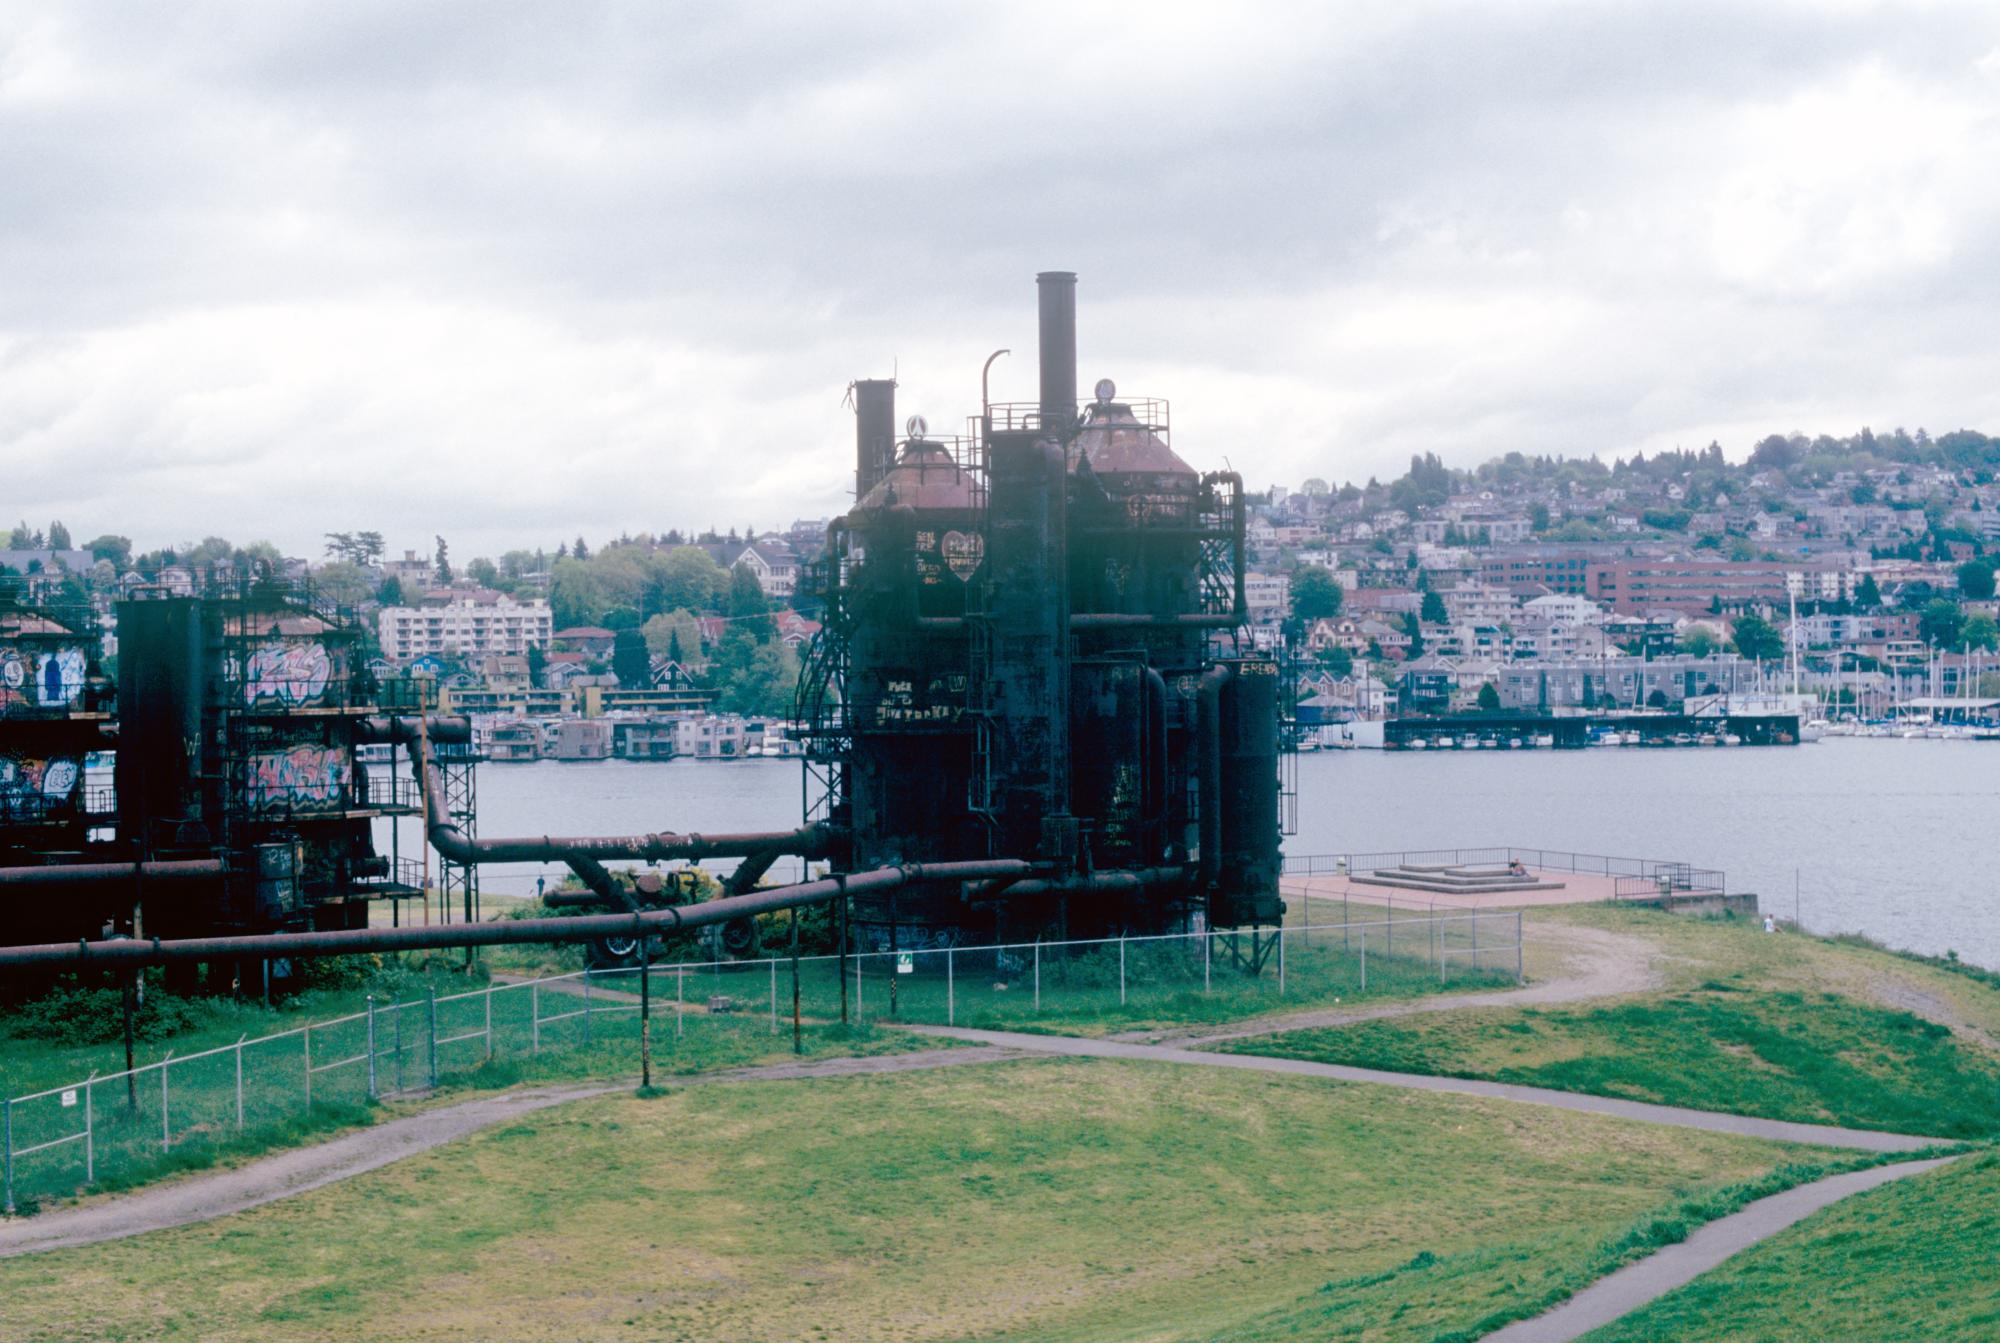 Seattle (1995) - Gas Works